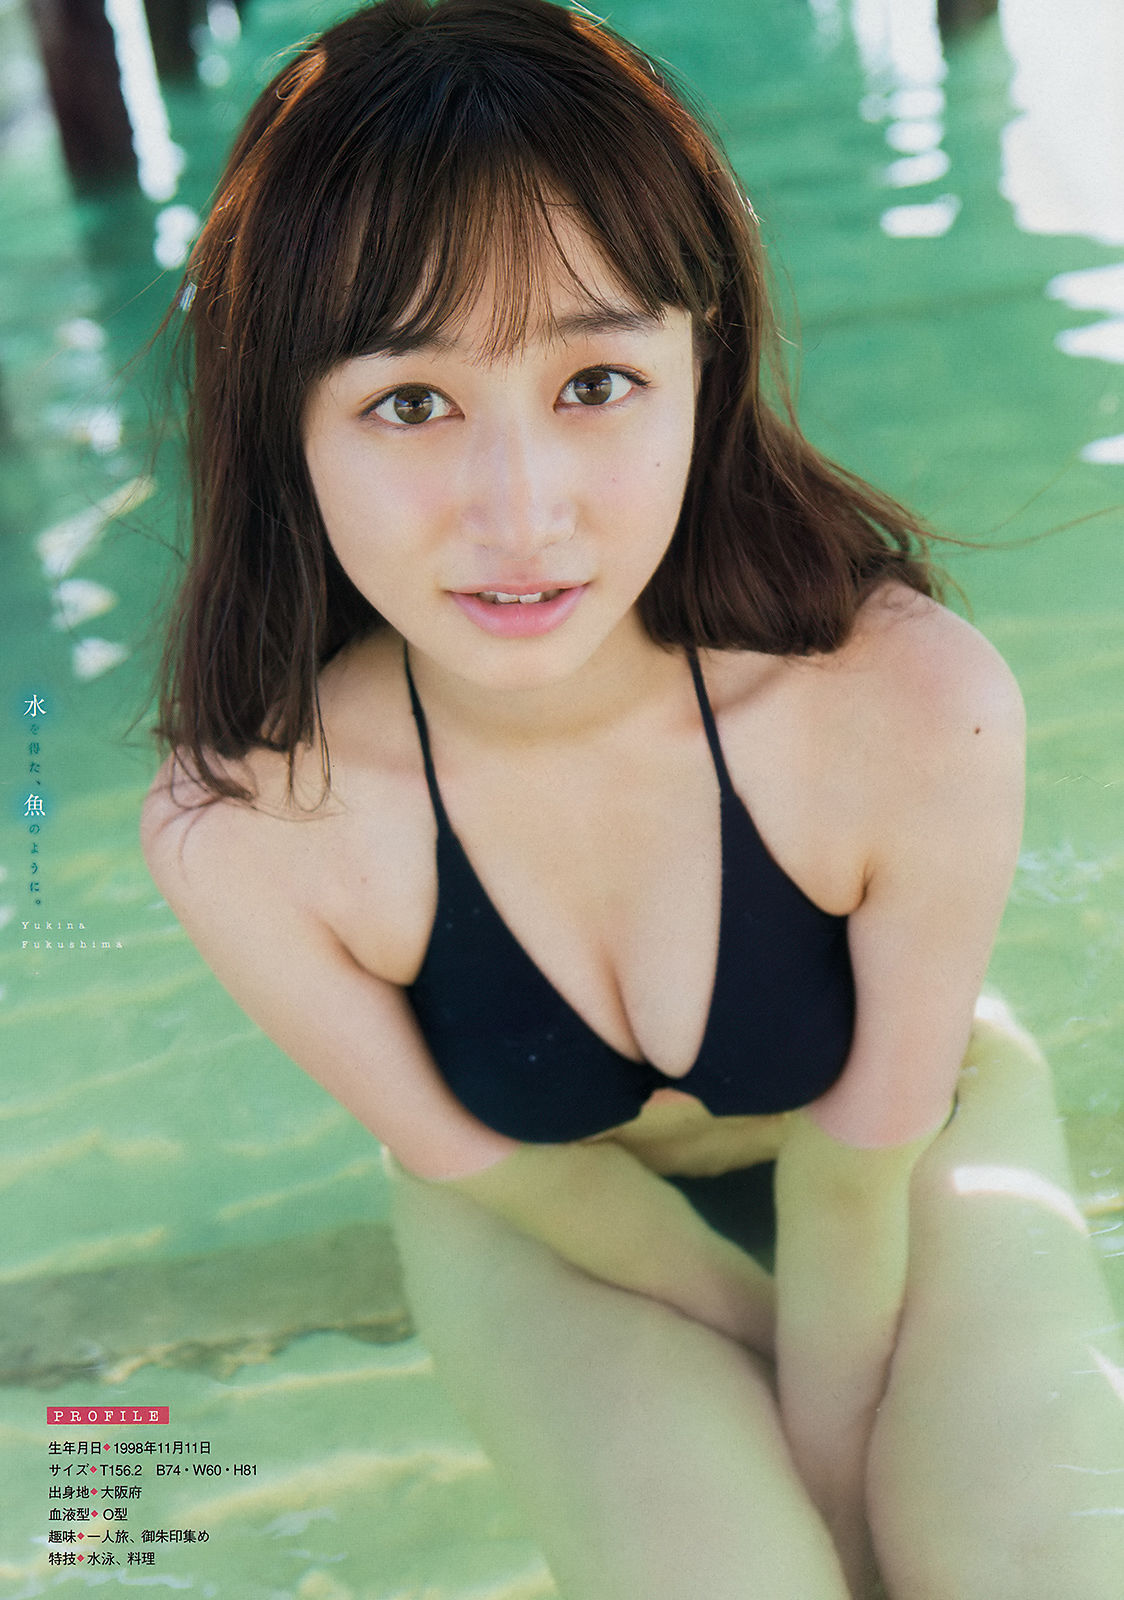 [Young Magazine]美胸美乳:福岛雪菜高品质写真作品个人分享(13P)